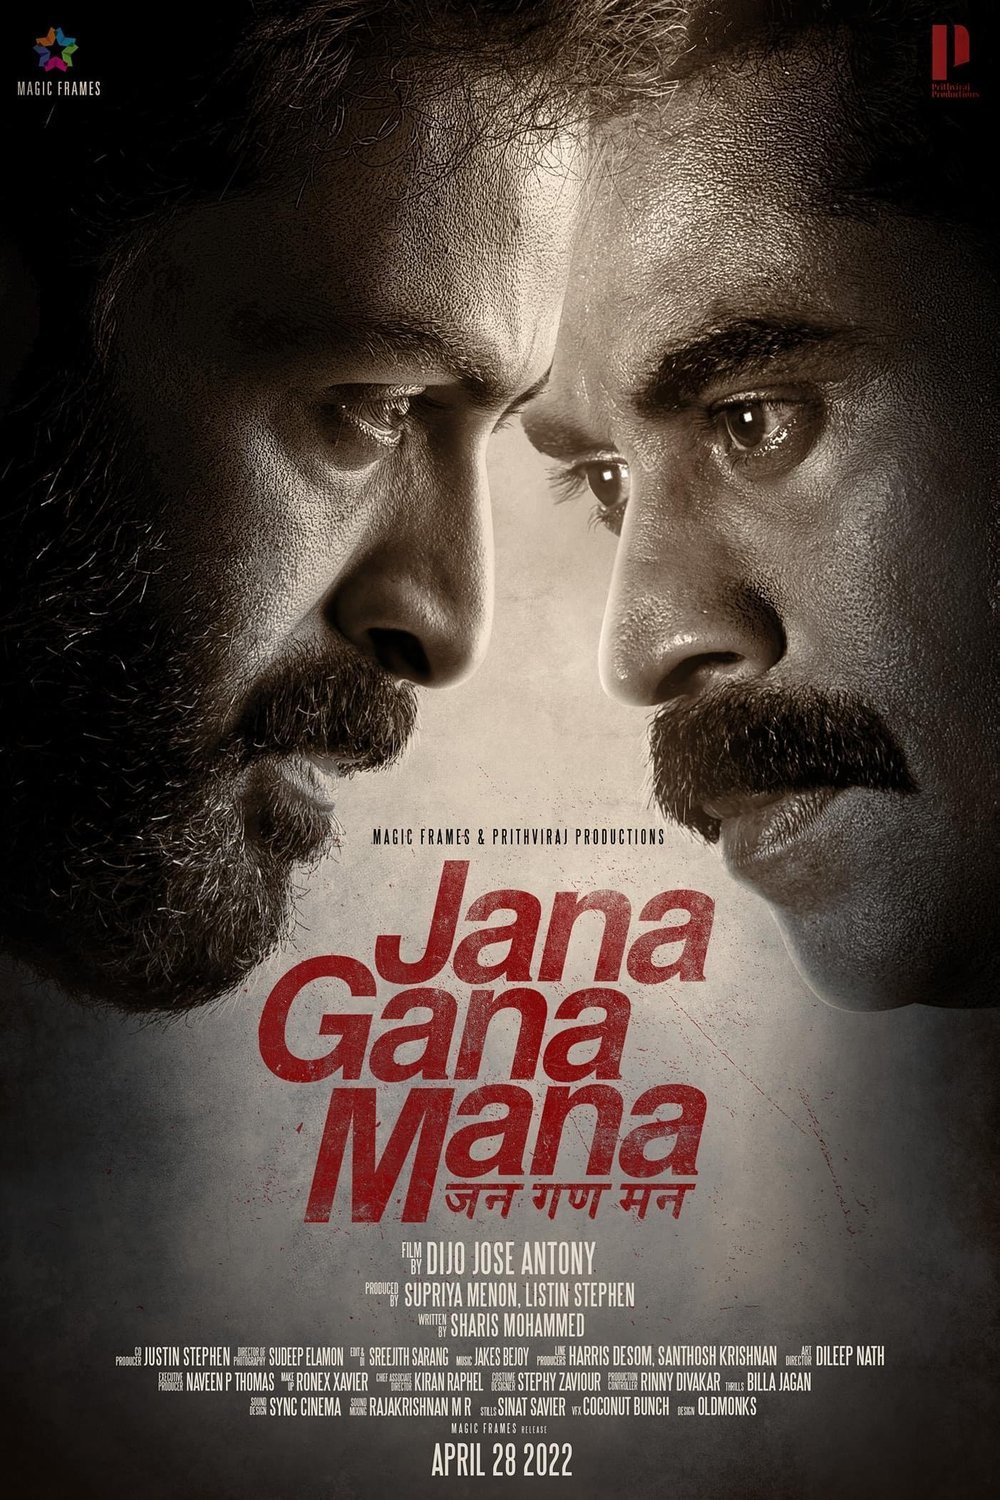 Malayalam poster of the movie Jana Gana Mana